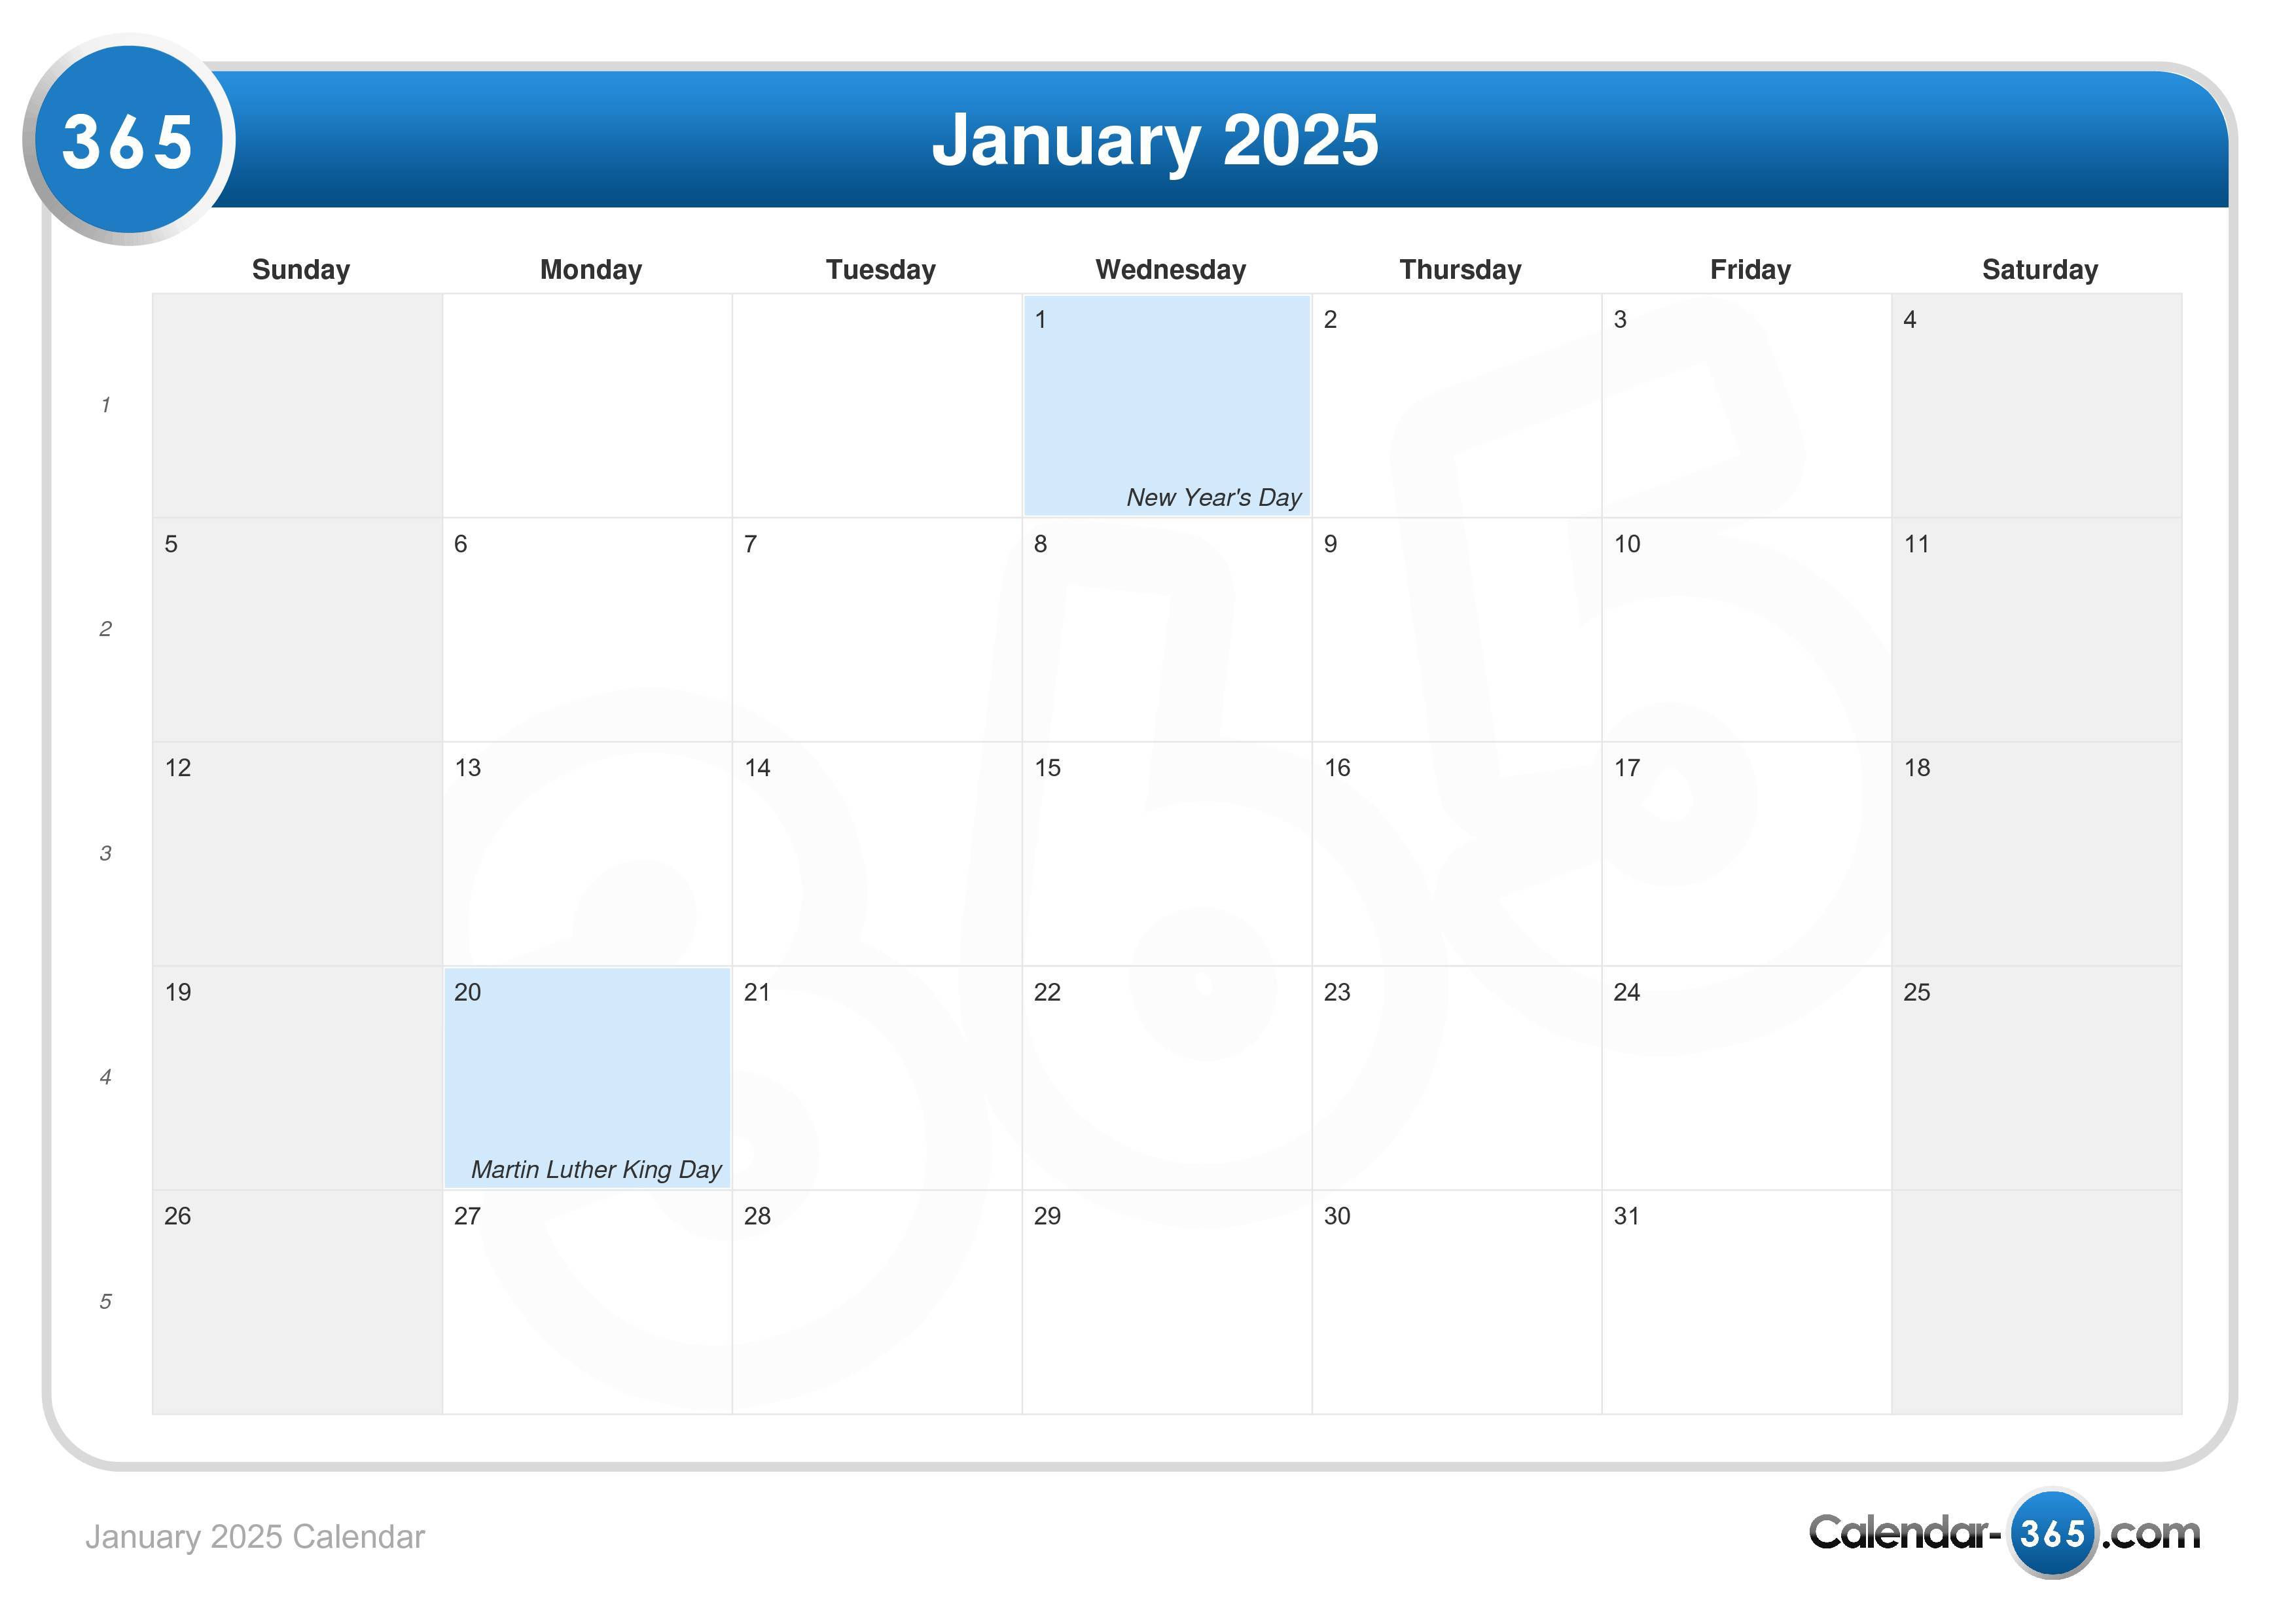 January 2025 Calendar